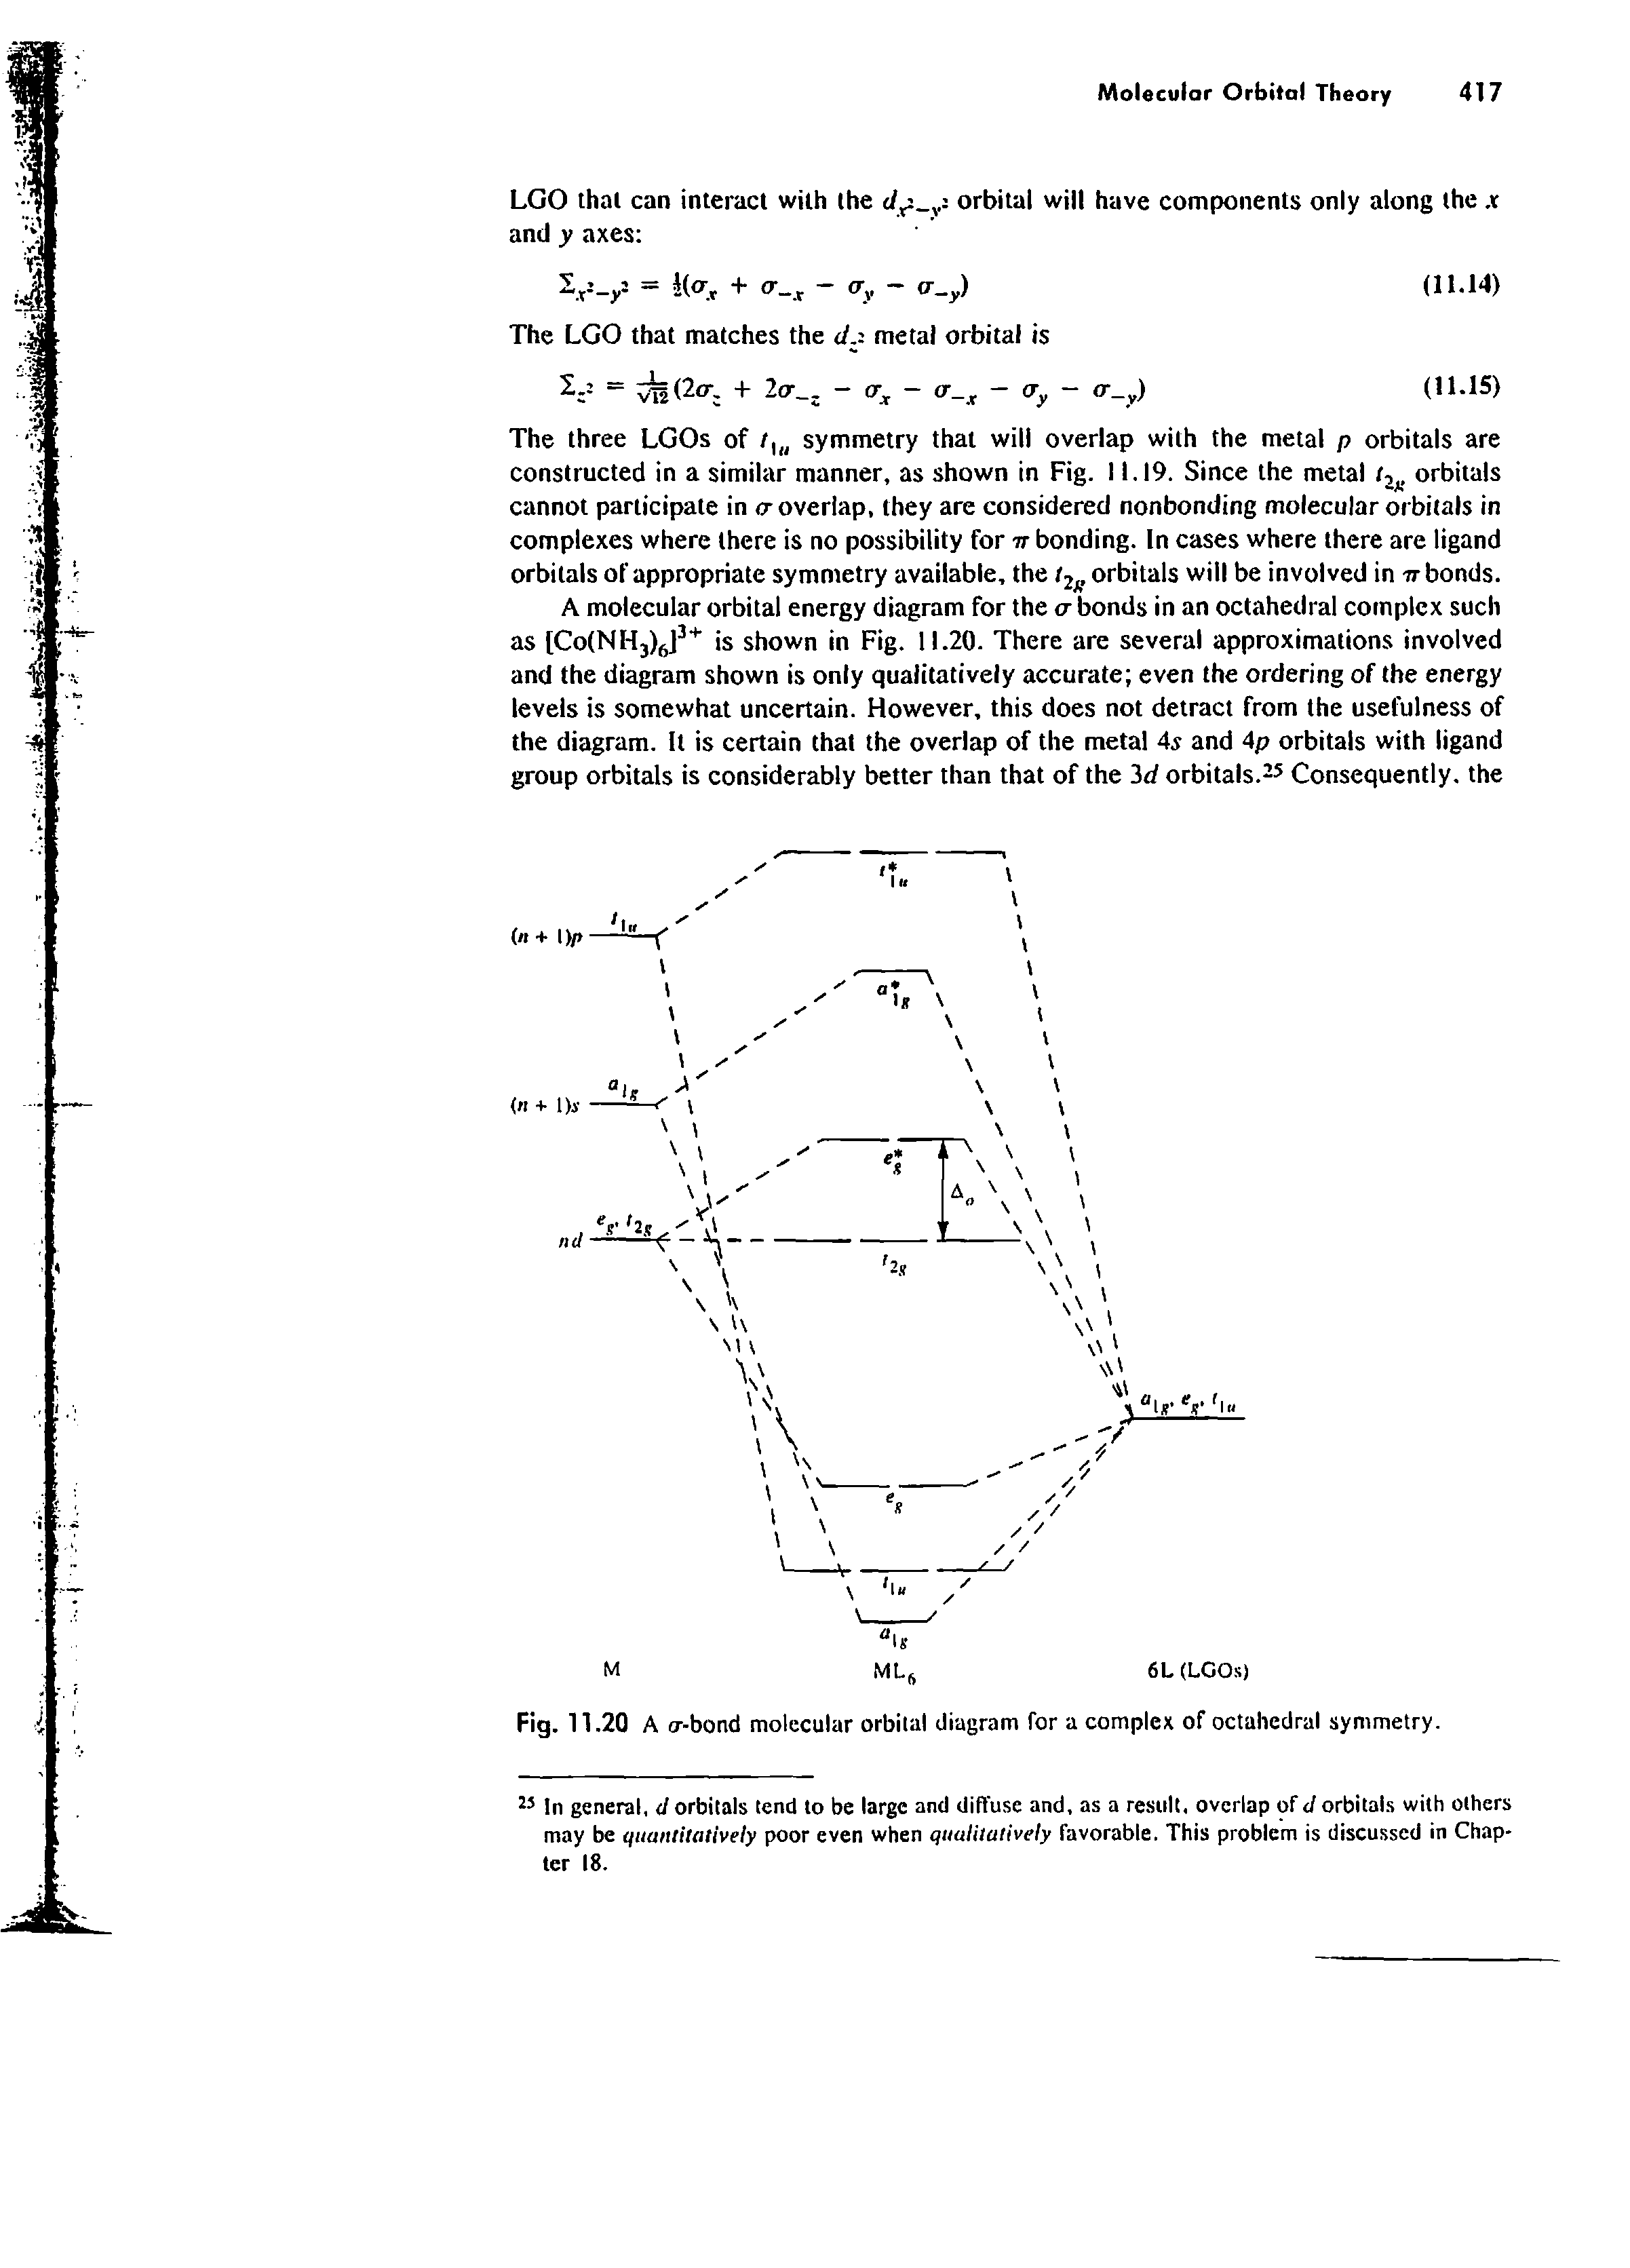 Fig. 11.20 A o--bond molecular orbital diagram for a complex of octahedral symmetry.